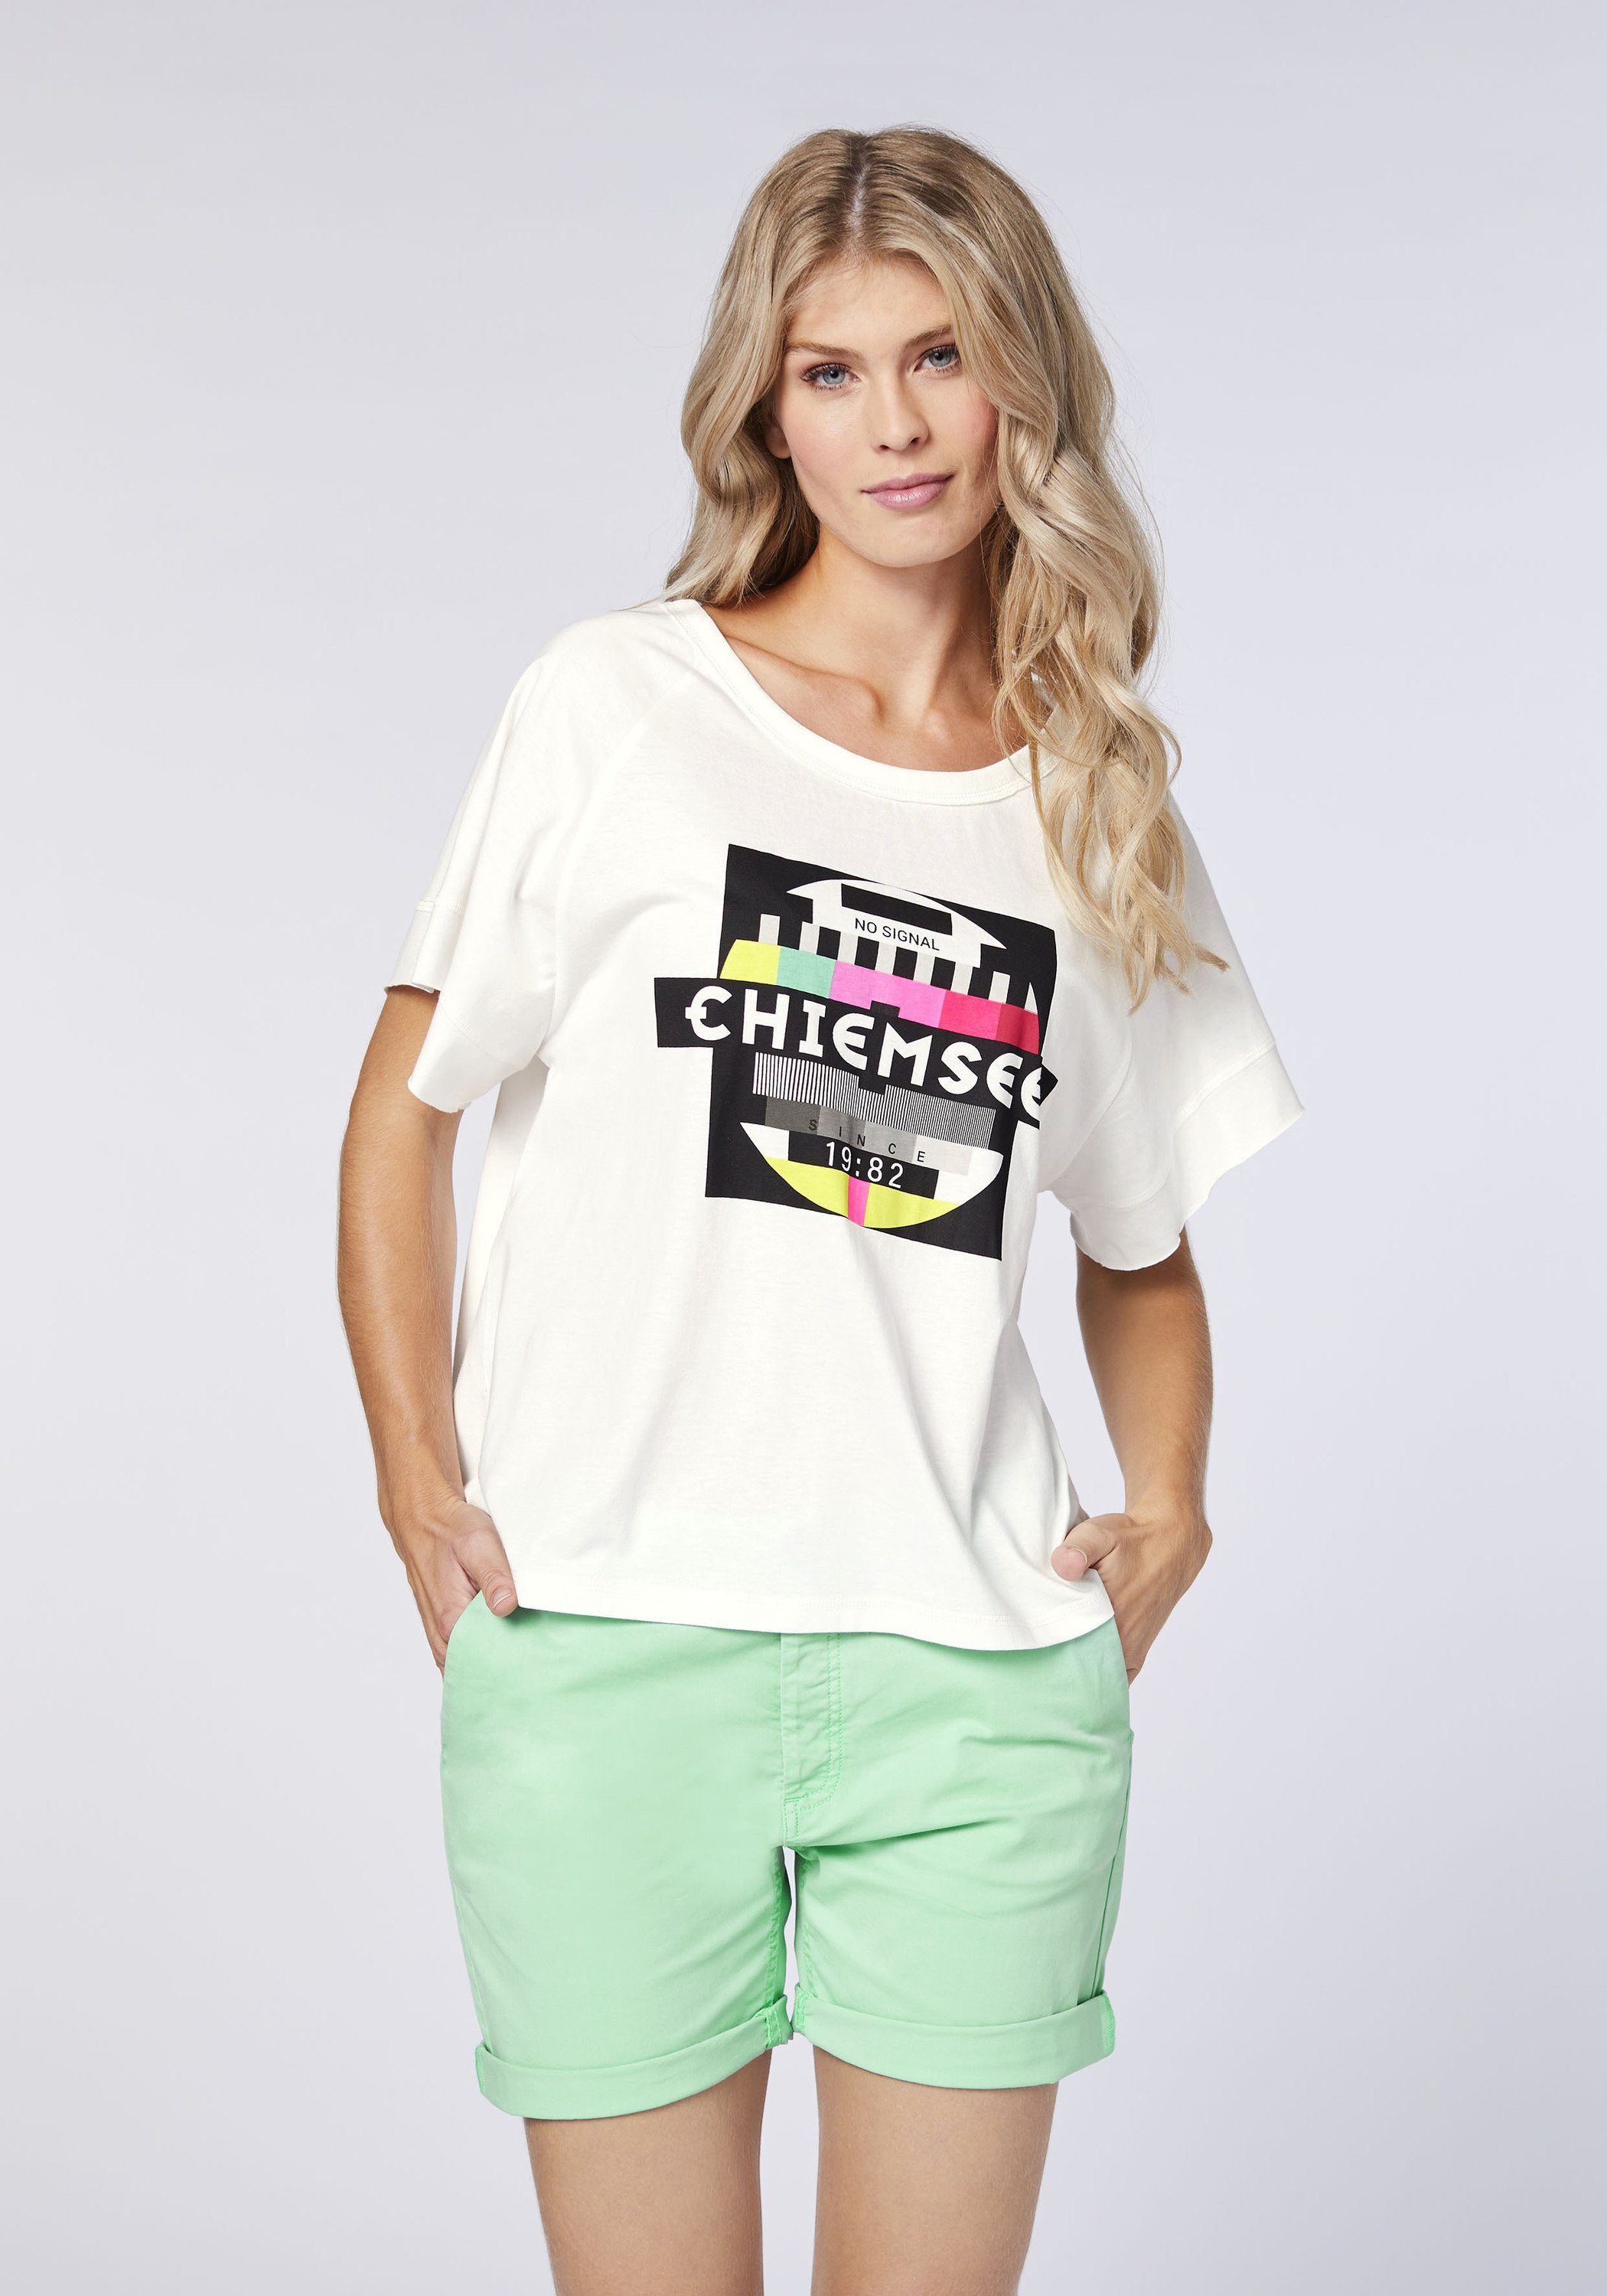 T-Shirt Chiemsee mit Print-Shirt Kastiges White Star 1 NO-SIGNAL-Print